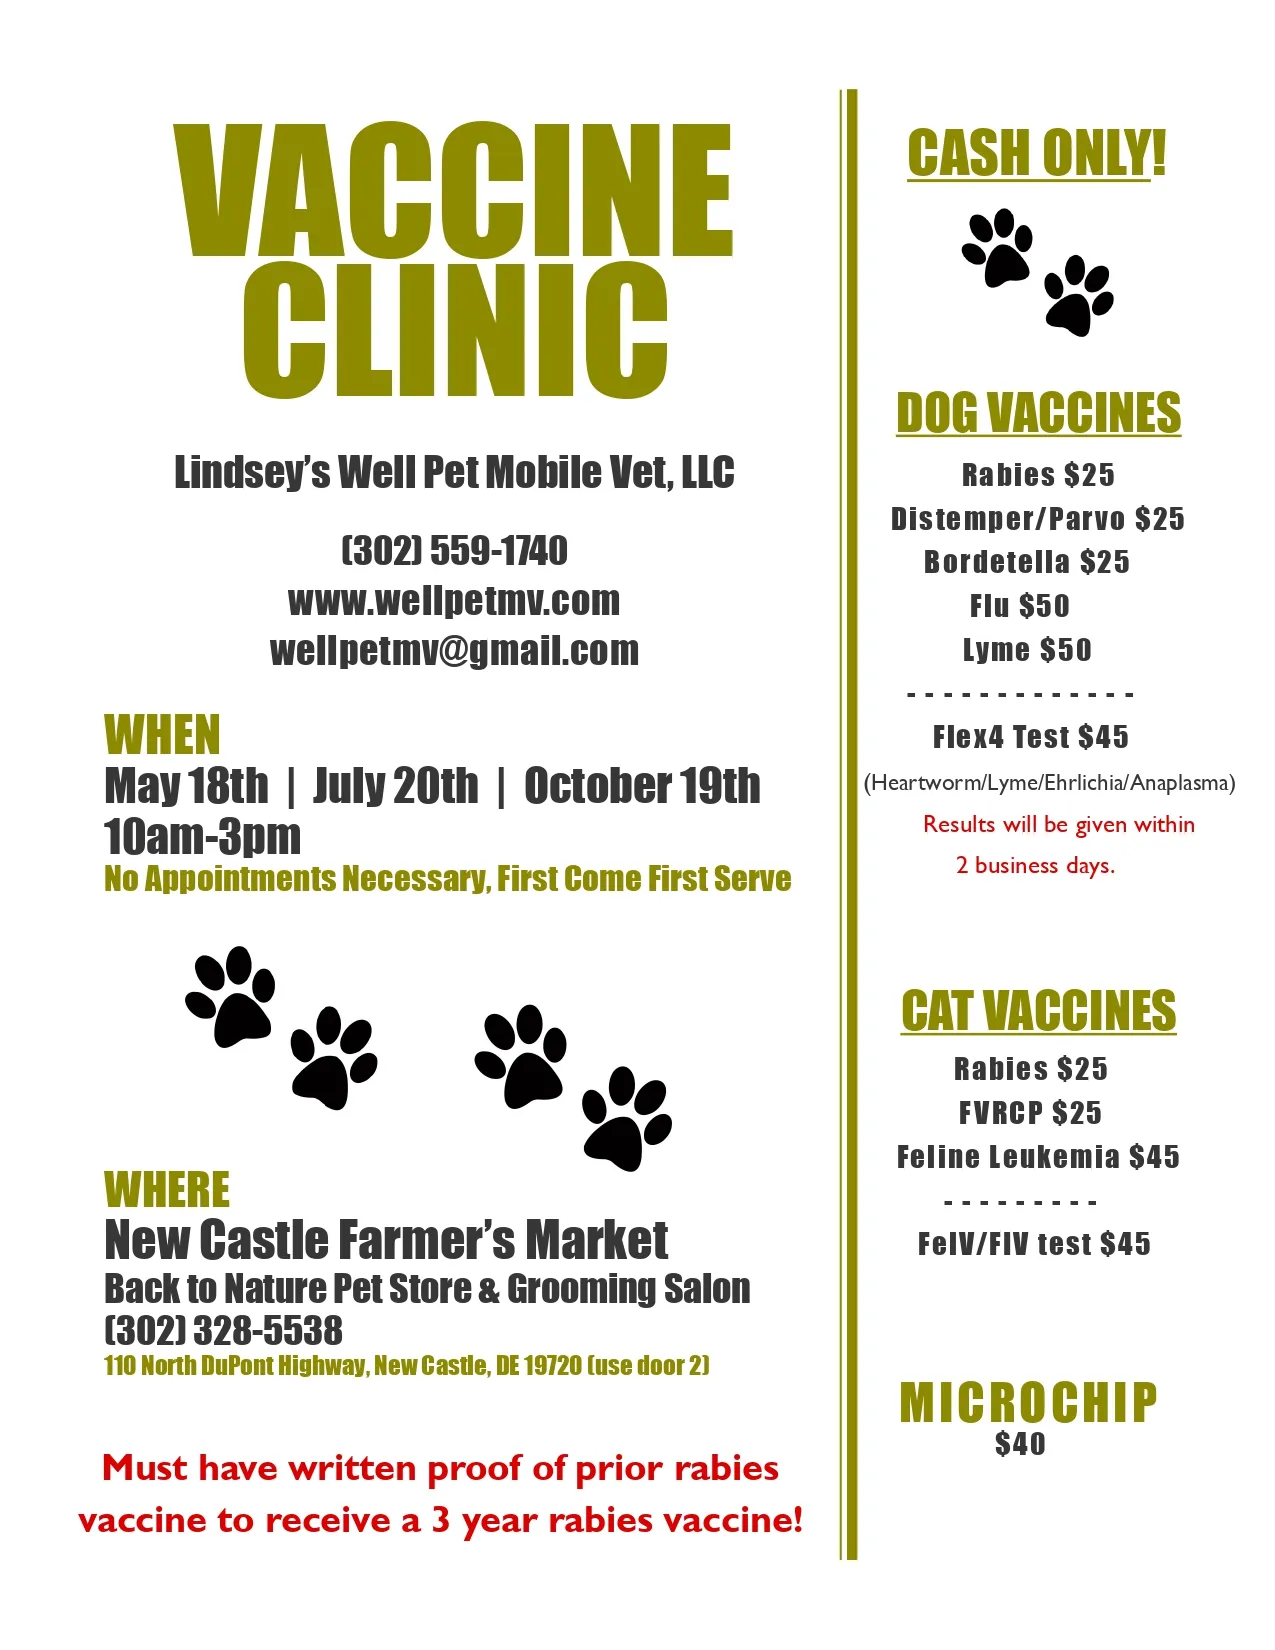 Vaccine clinic details